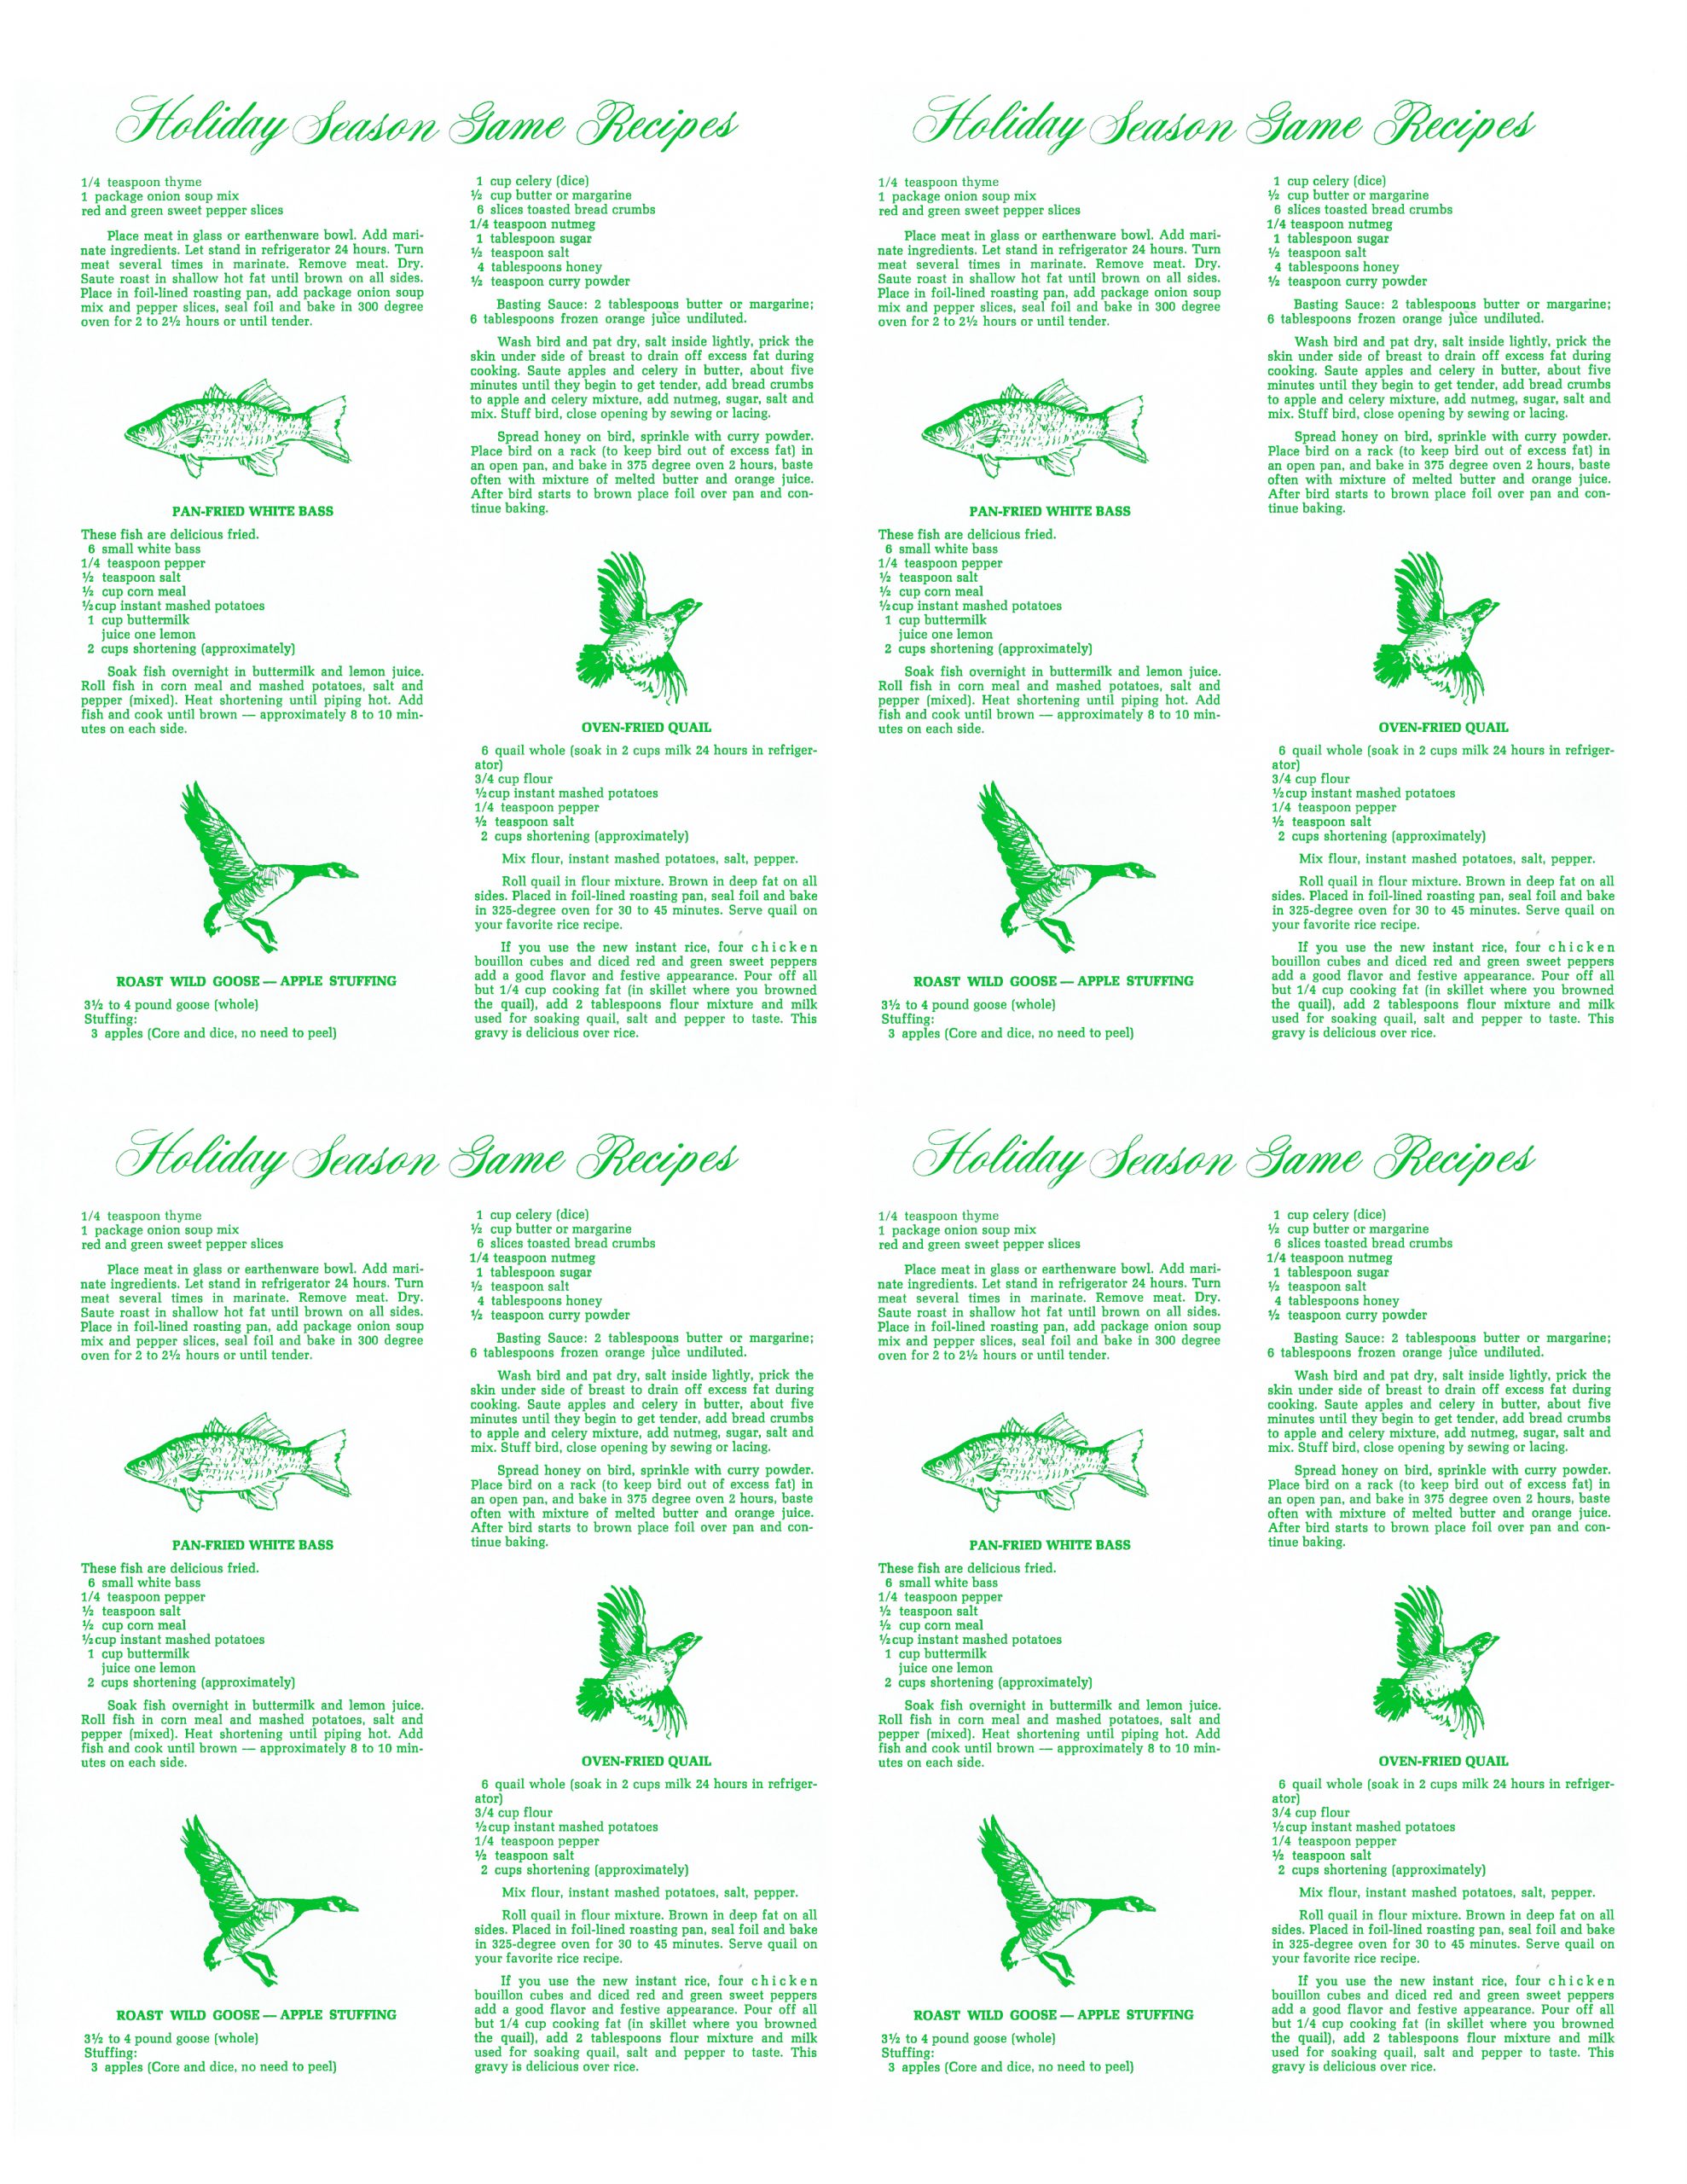 wild game recipes - green on white background